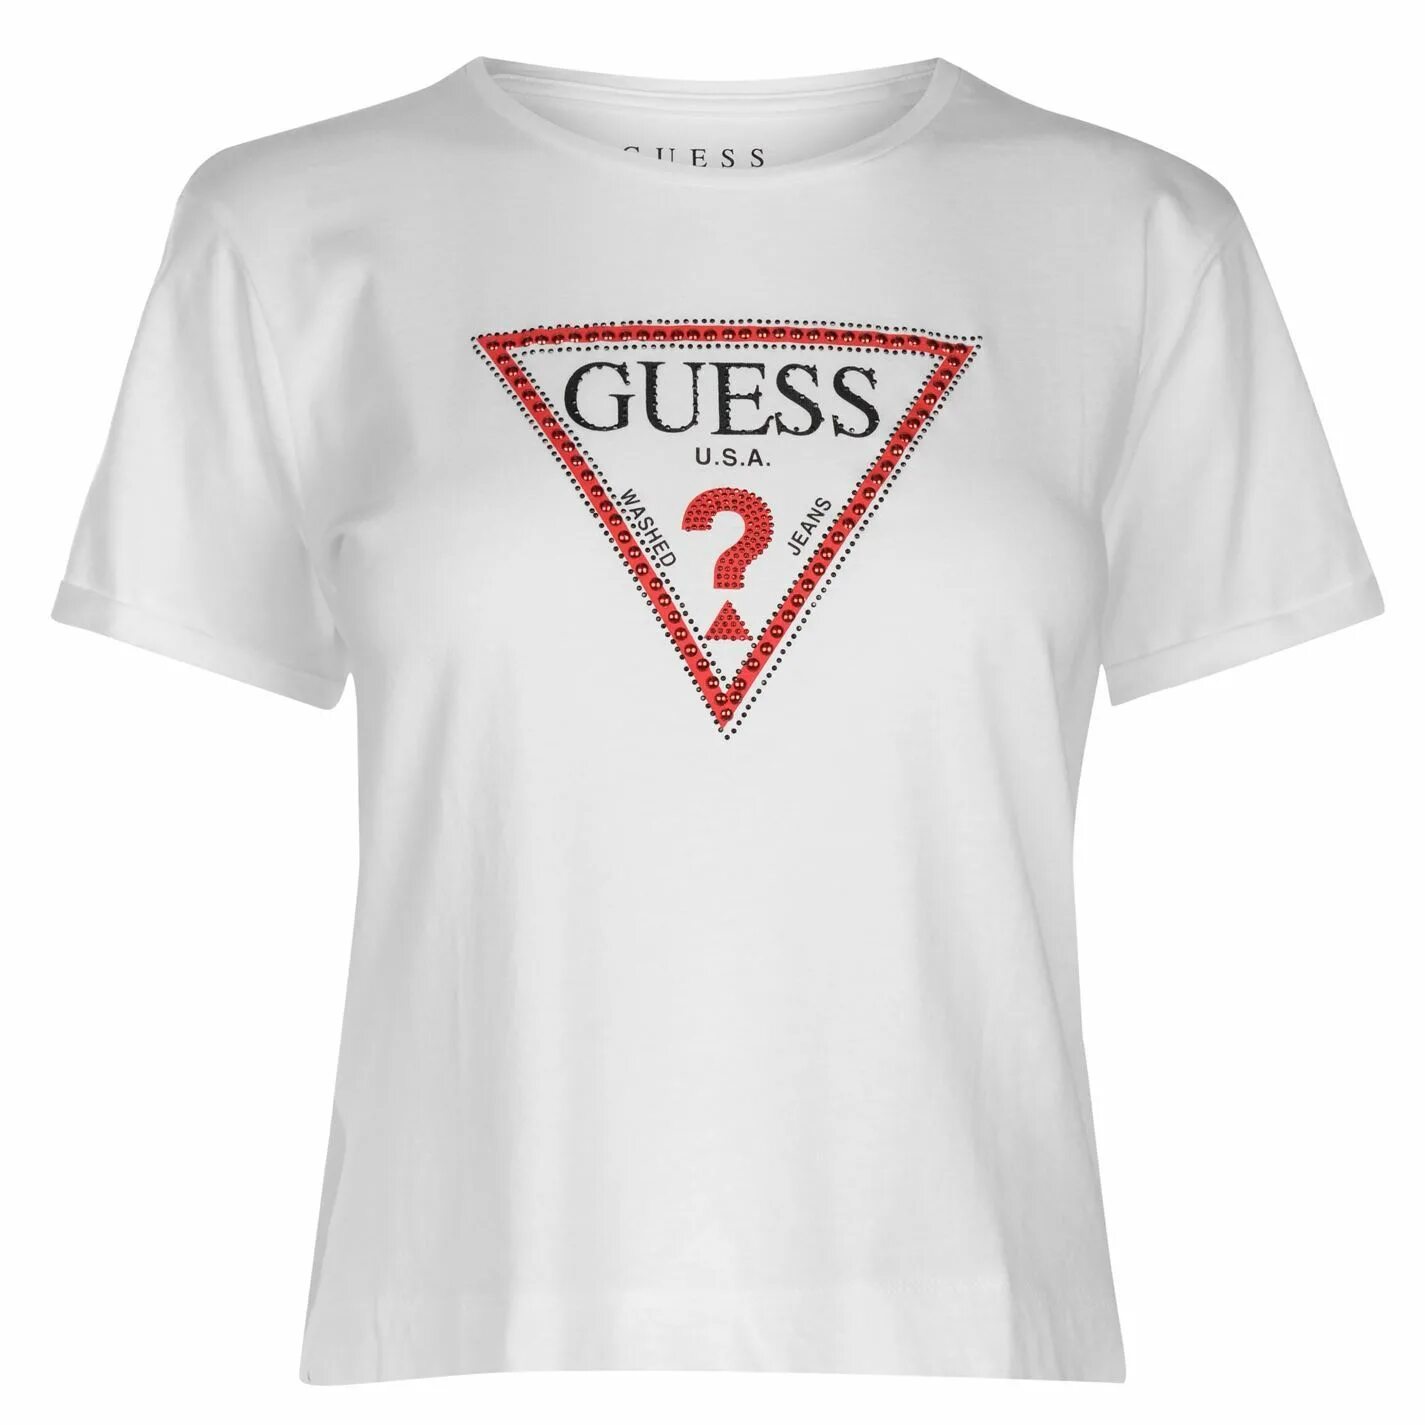 Guess футболка. Guess Originals футболка. Guess USA футболка. Бирка на футболке guess.